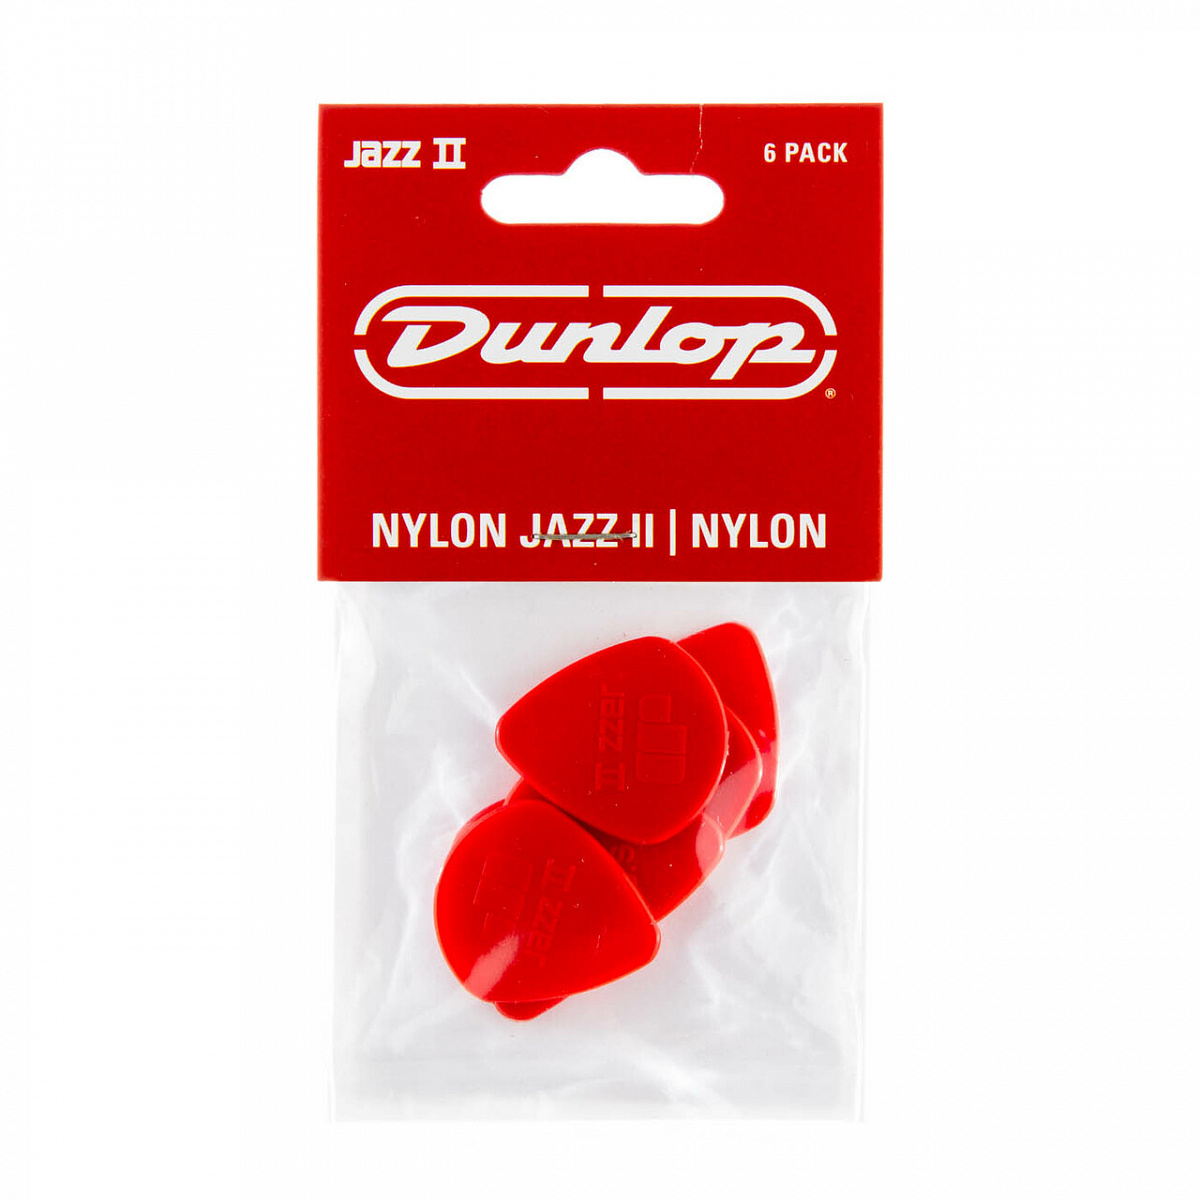 Dunlop Nylon Jazz II 47P2N 6Pack  медиаторы, красные, 6 шт.